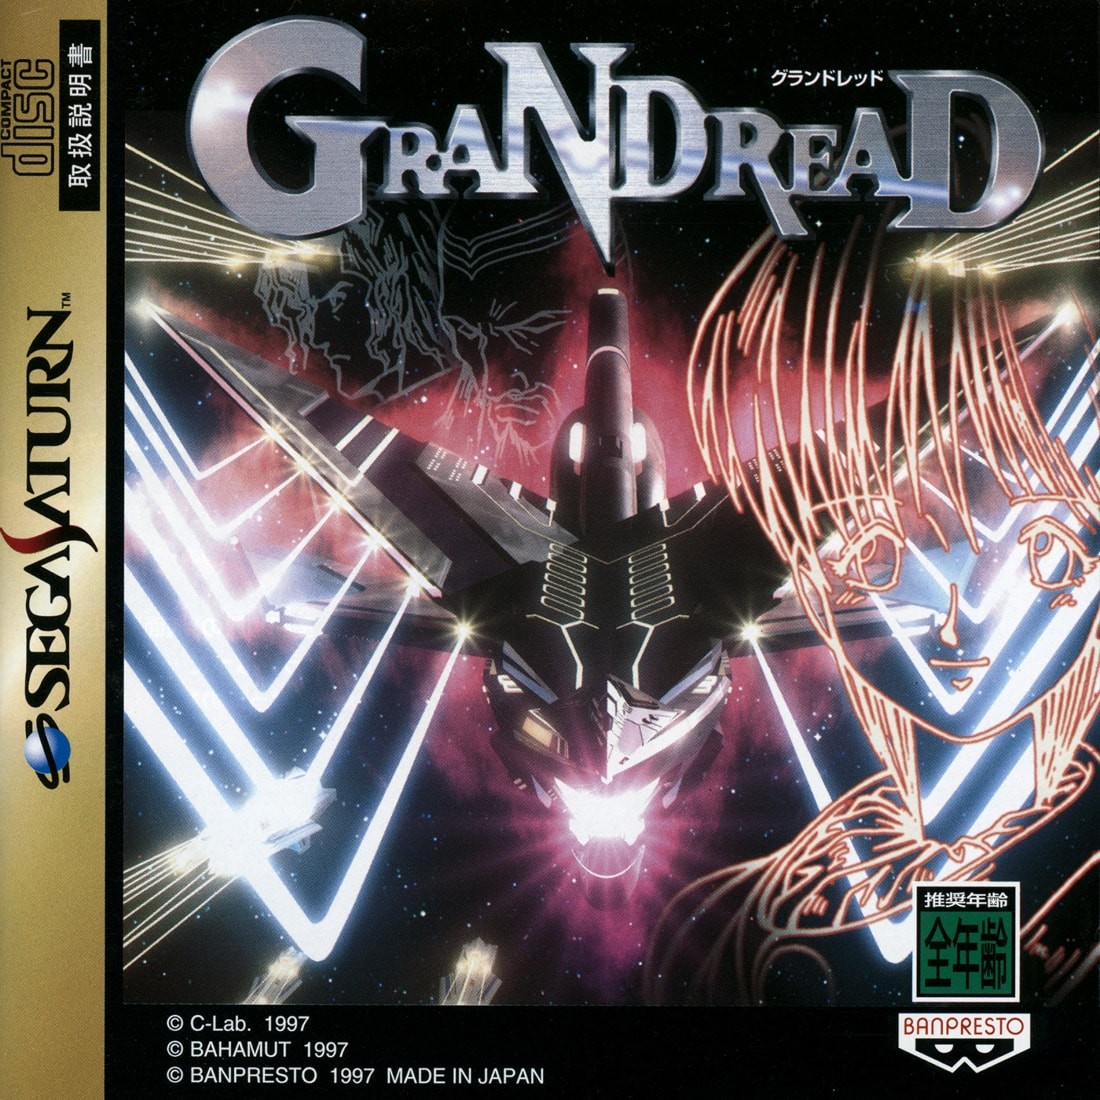 Capa do jogo GranDread